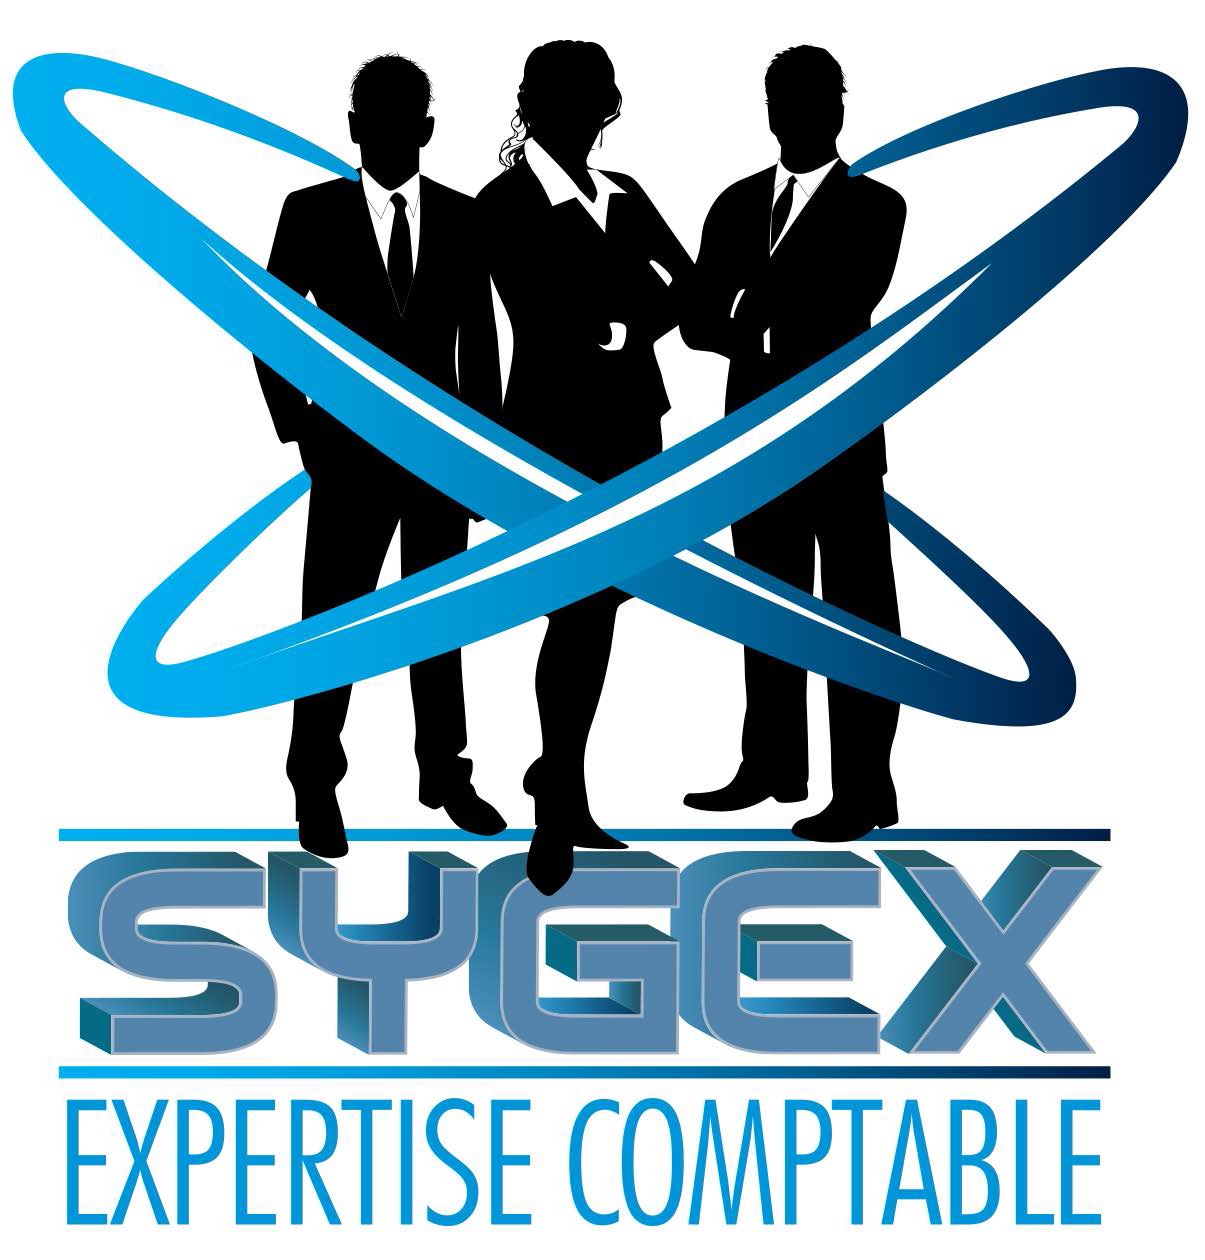 SYGEX EXPERTISE COMPTABLE - QUIMPER - MORLAIX 